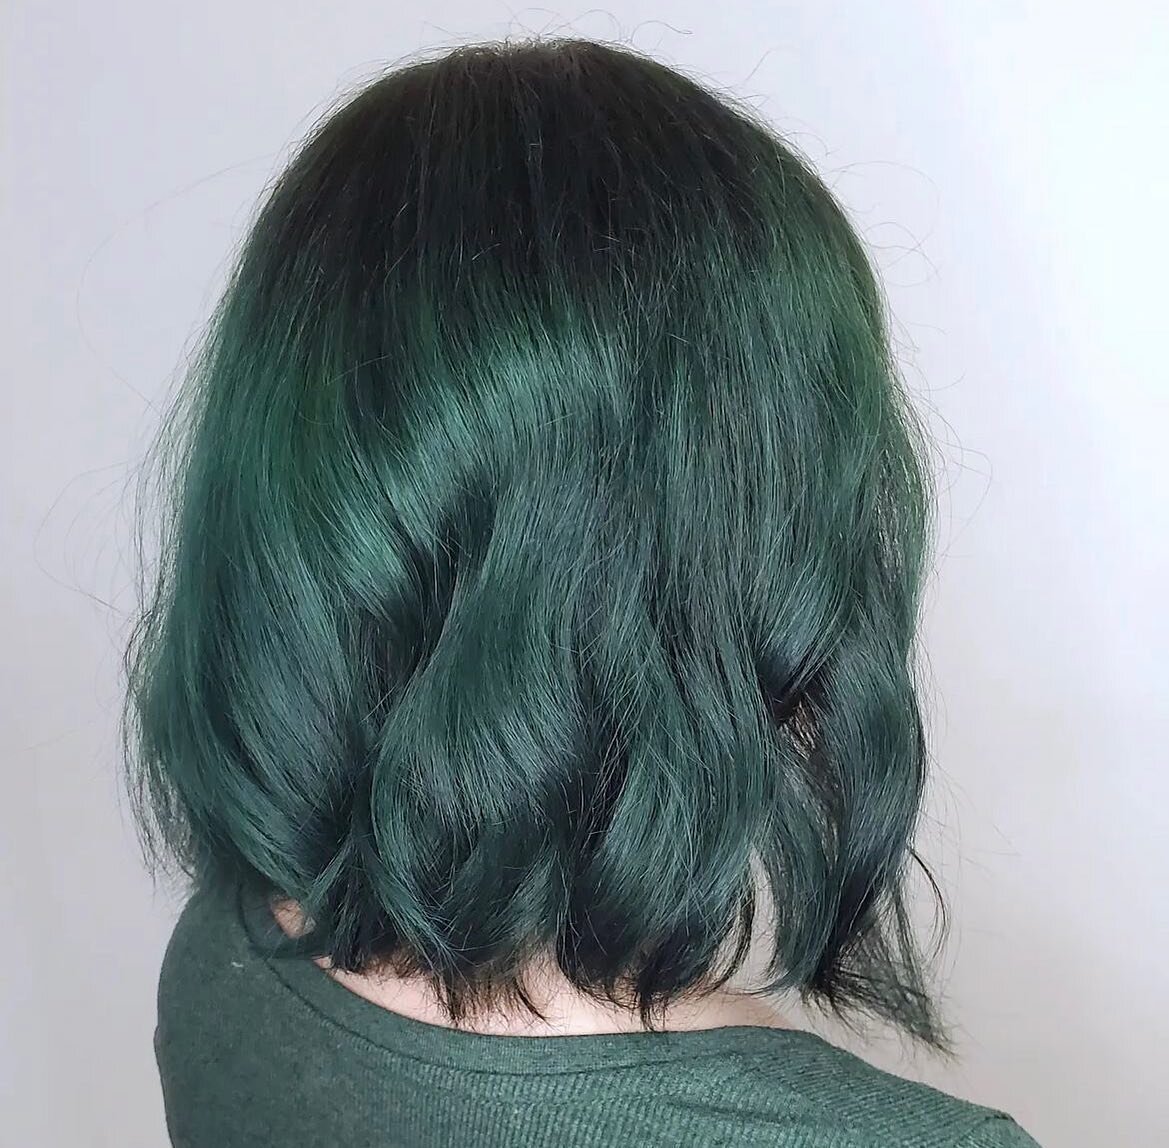 Custom emerald green hair by @tashadoesyourhair  #vegancolor #mplshair #mnhairstylist #davinessalon #mplshairsalon #mnhairsalon #mplshairstylist #southmpls #haircolor #haircut #greenhair #tashadoesyourhair